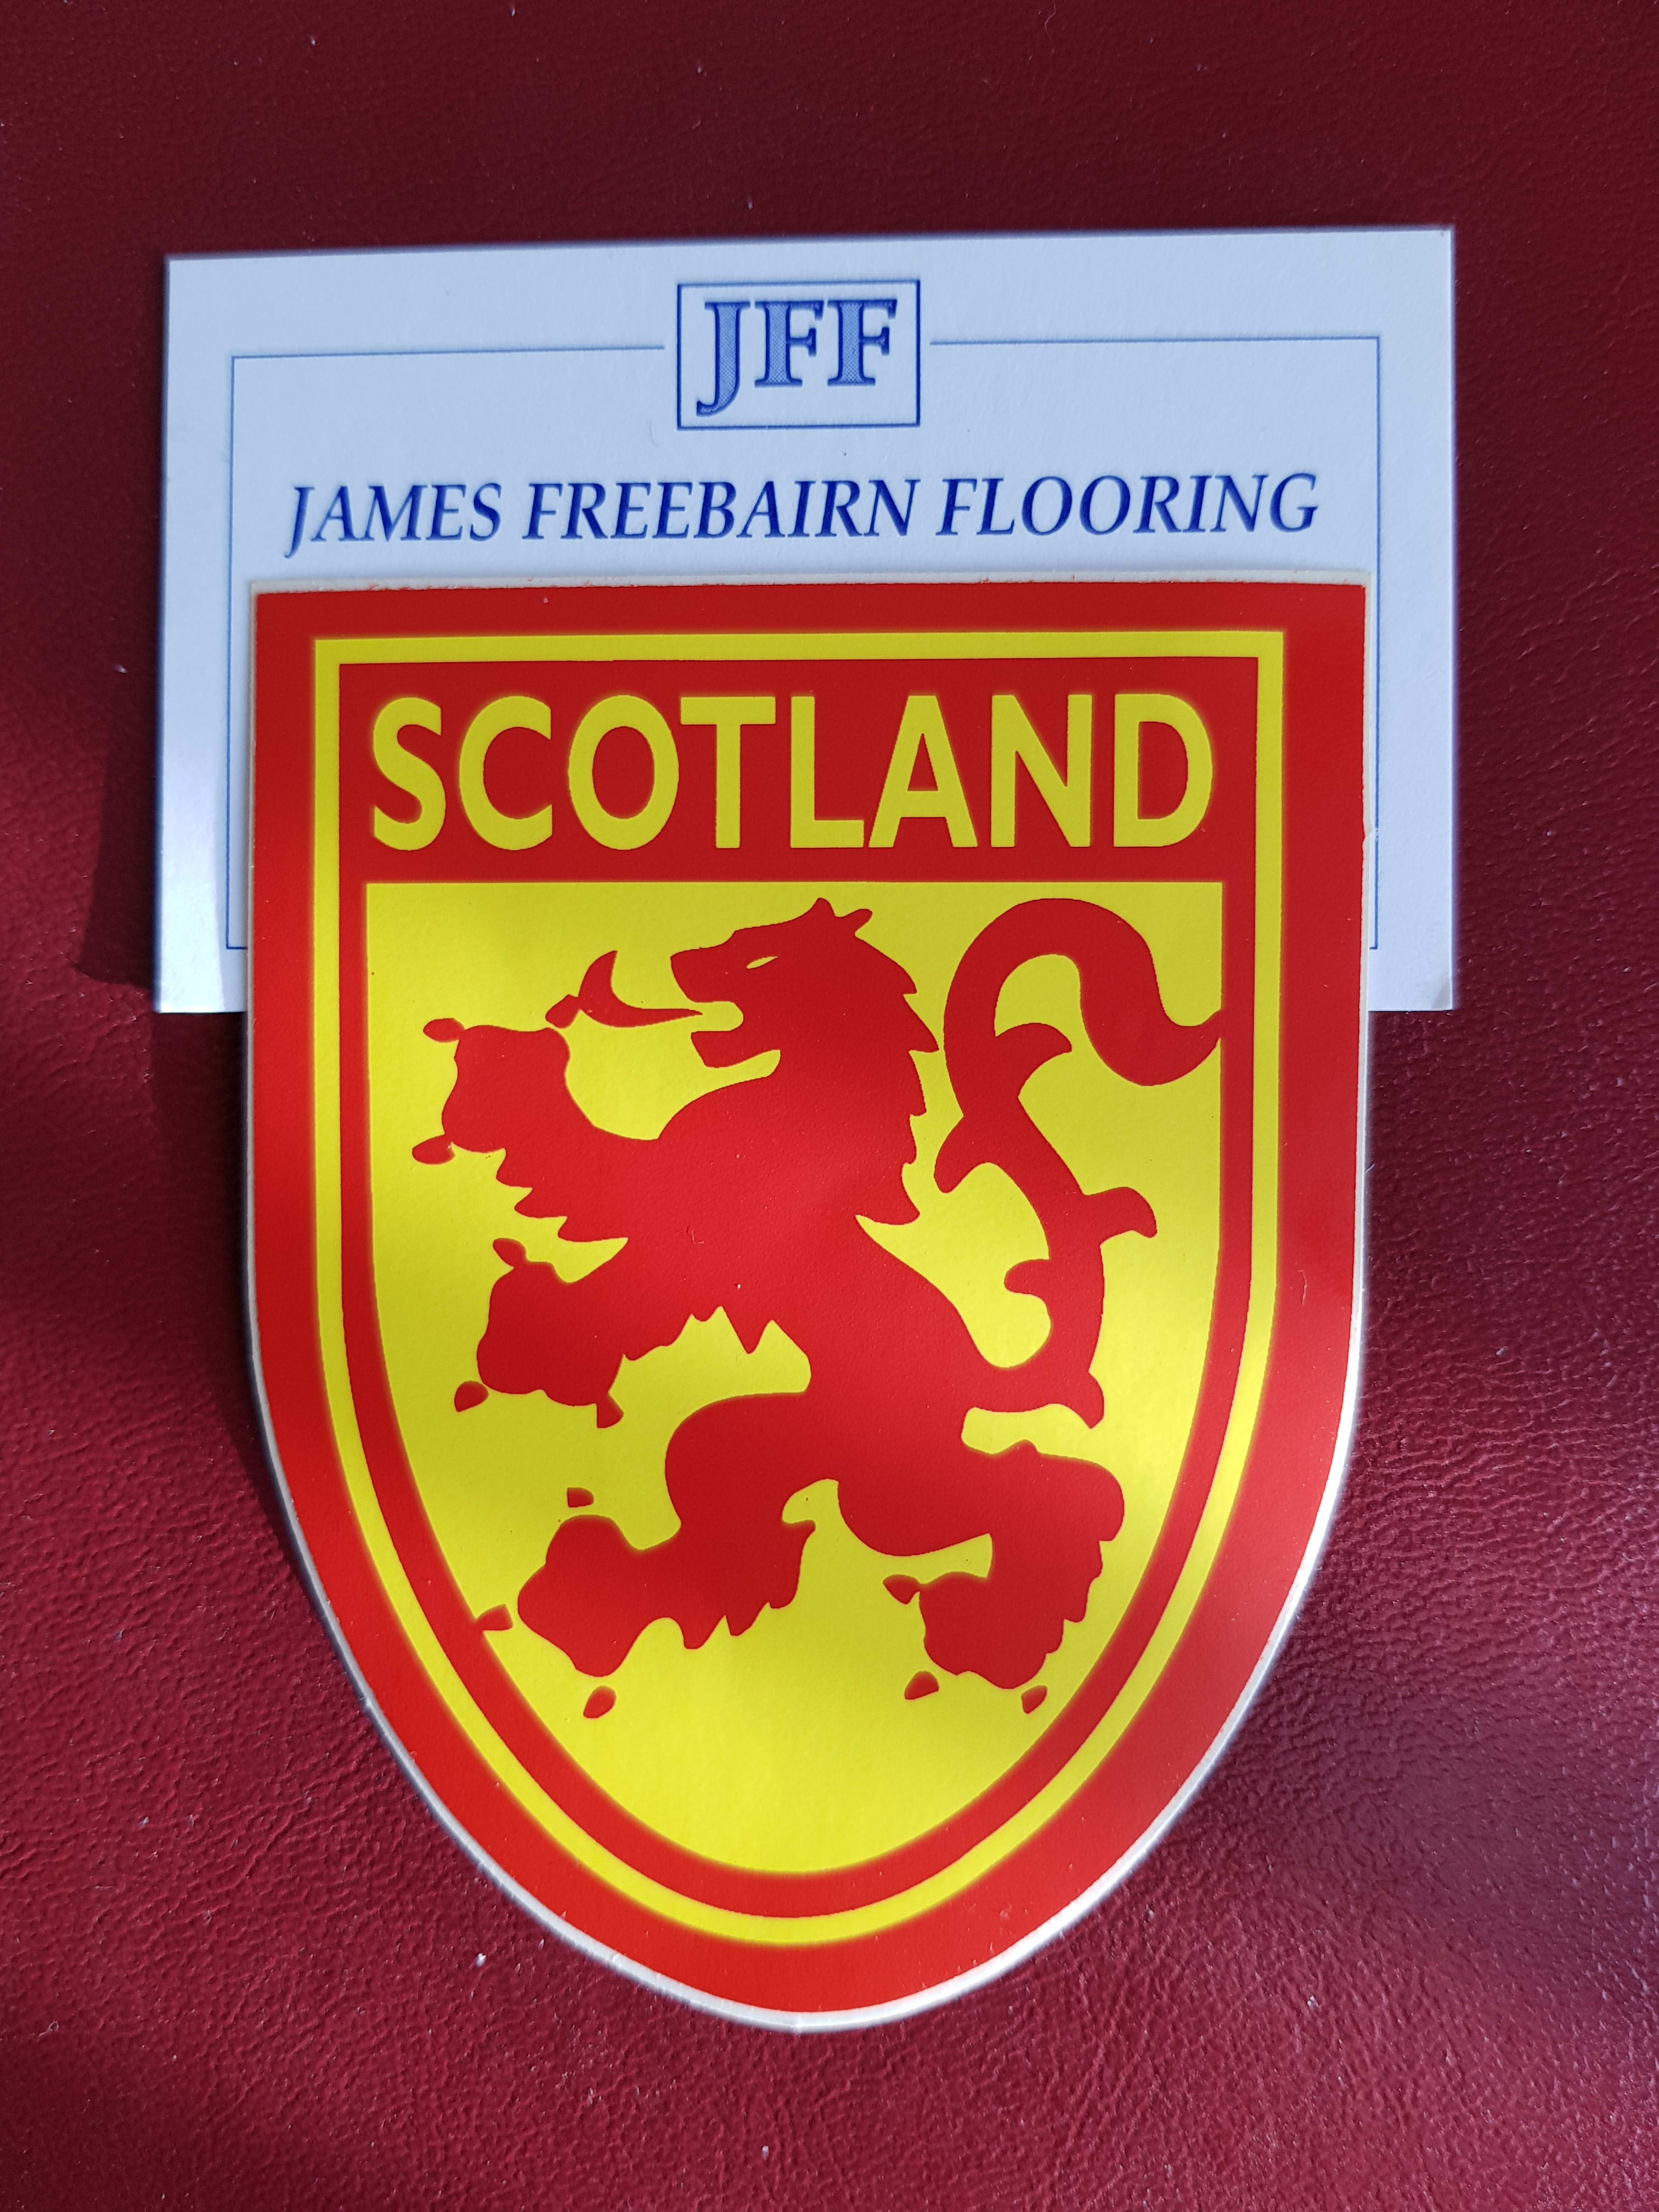 James Freebairn Flooring